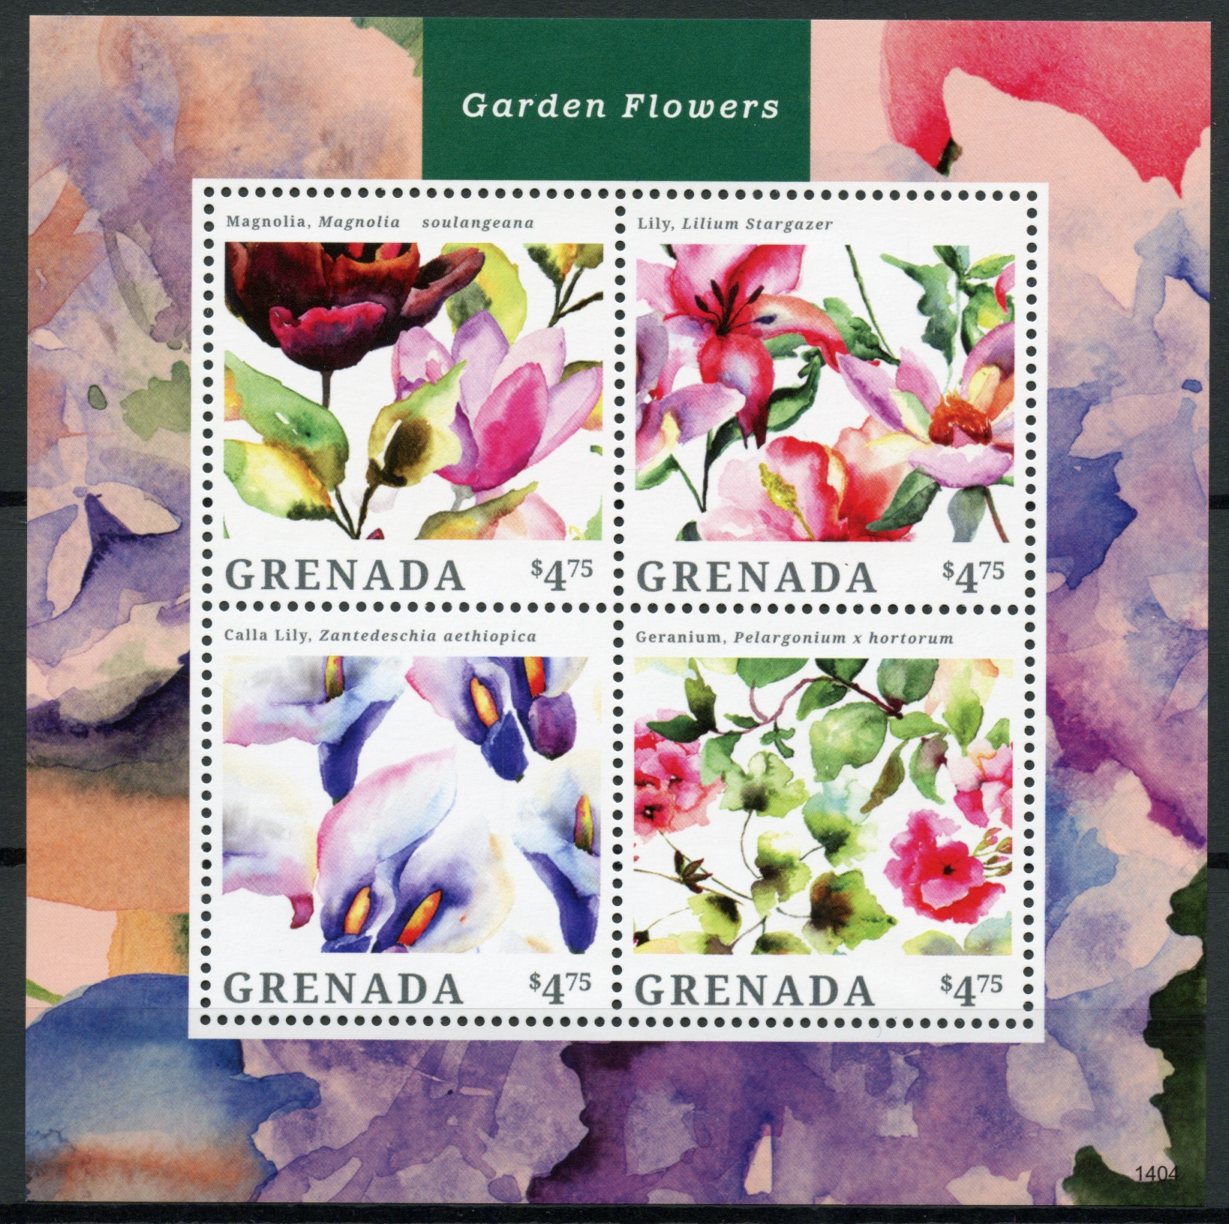 Grenada 2014 MNH Garden Flowers 4v M/S II Magnolia Calla Lily Geranium